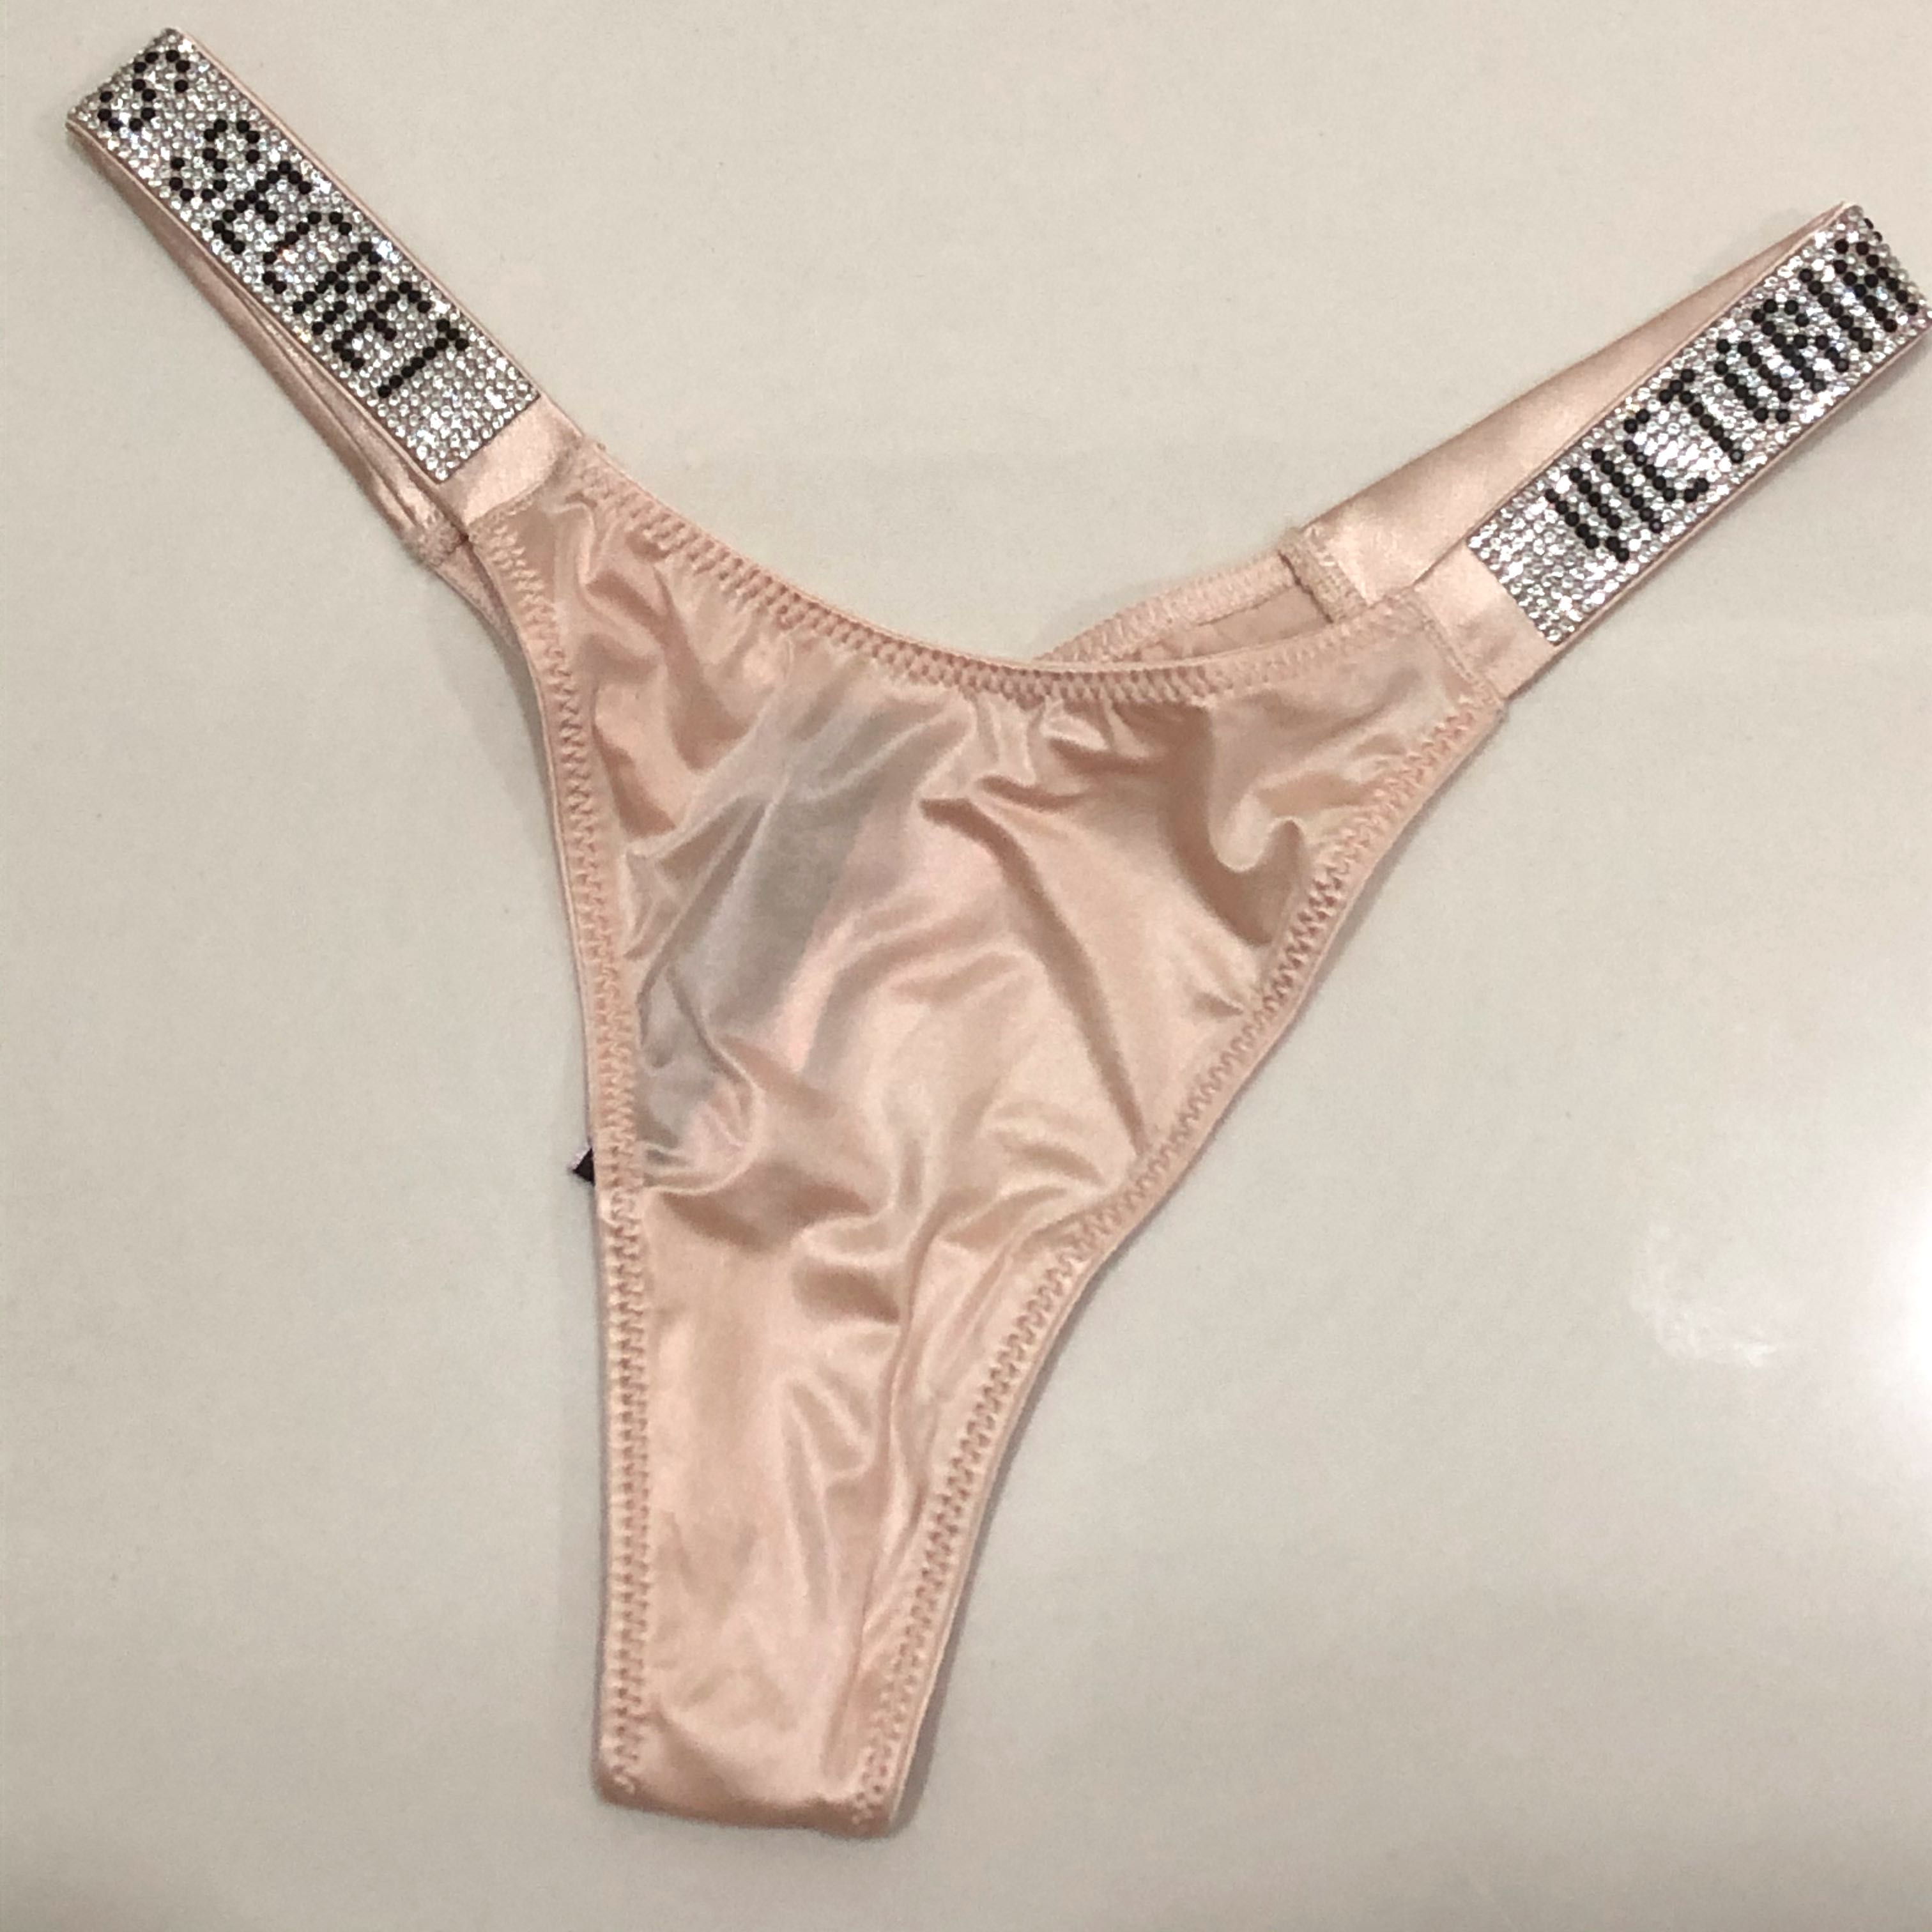 Victoria's Secret Rhinestone Shine Strap Thong Panty - Satin Champagne XS  Extra Small, Women's Fashion, New Undergarments & Loungewear on Carousell